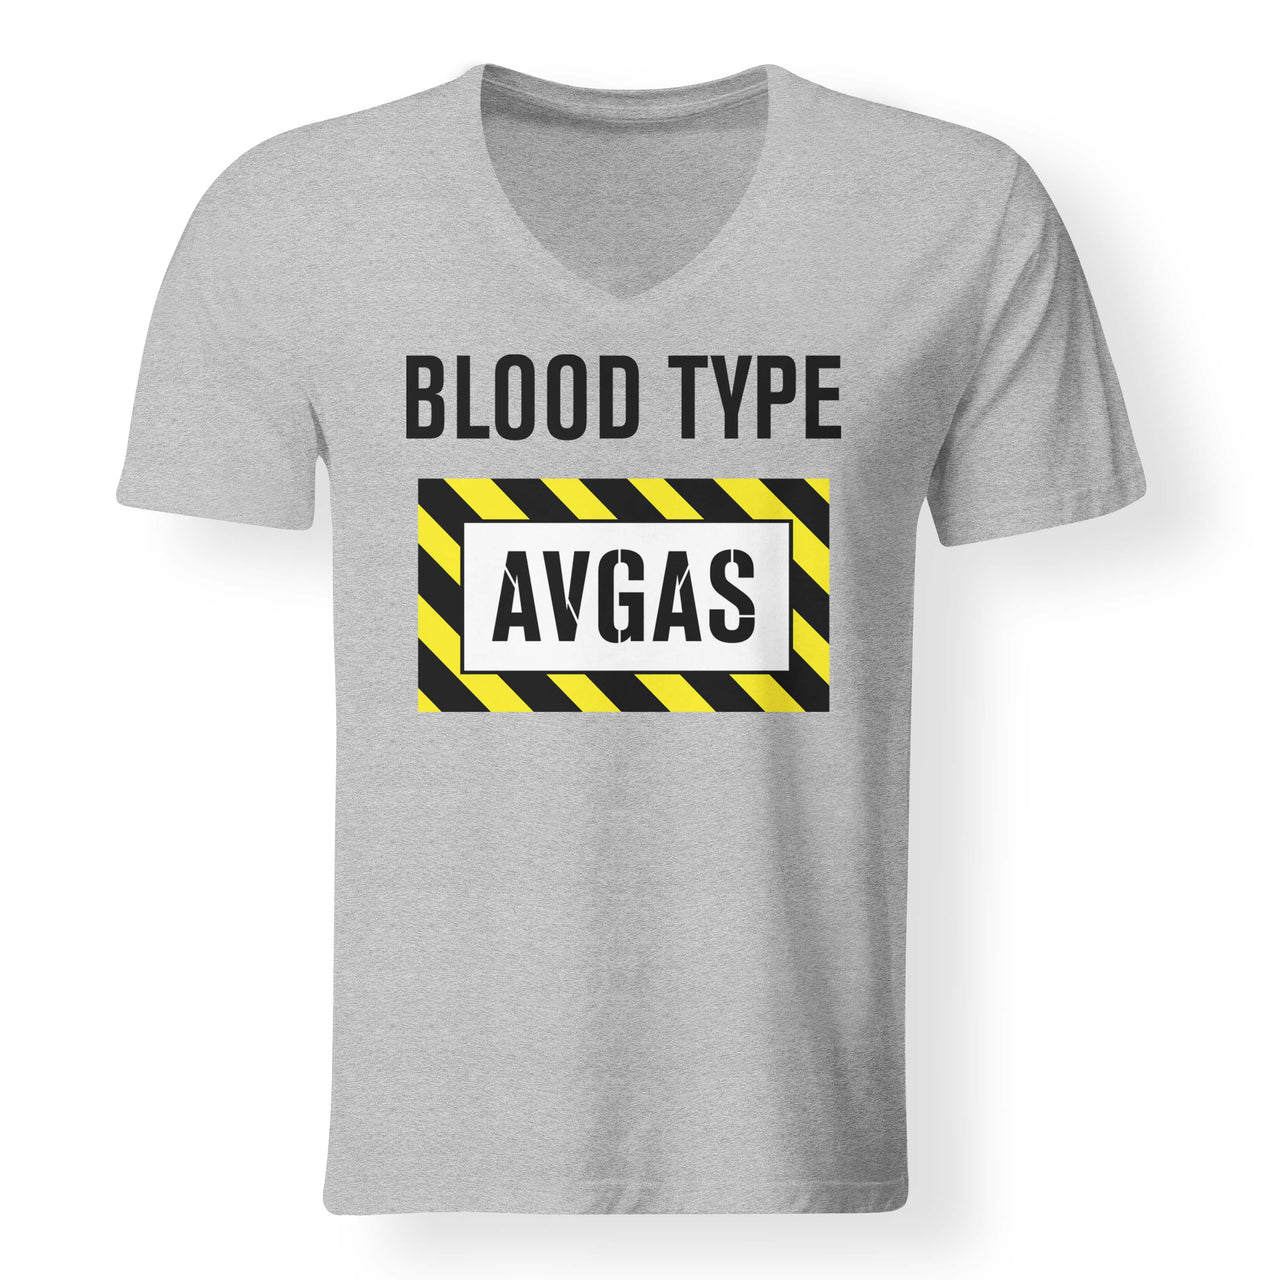 Blood Type AVGAS Designed V-Neck T-Shirts